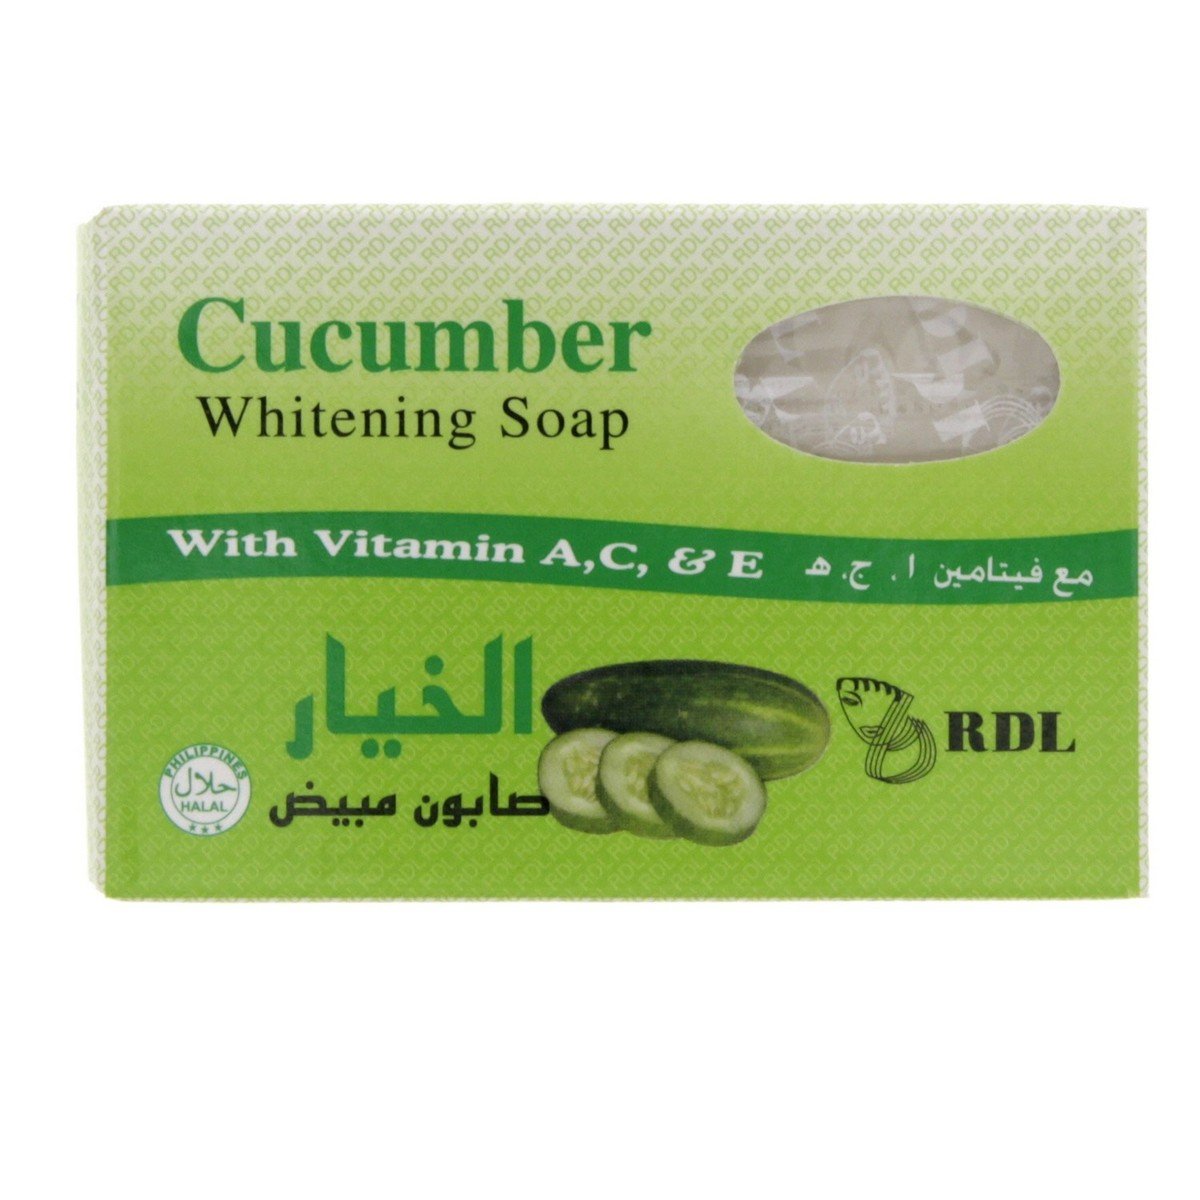 RDL Cucumber Whitening Soap 135 g